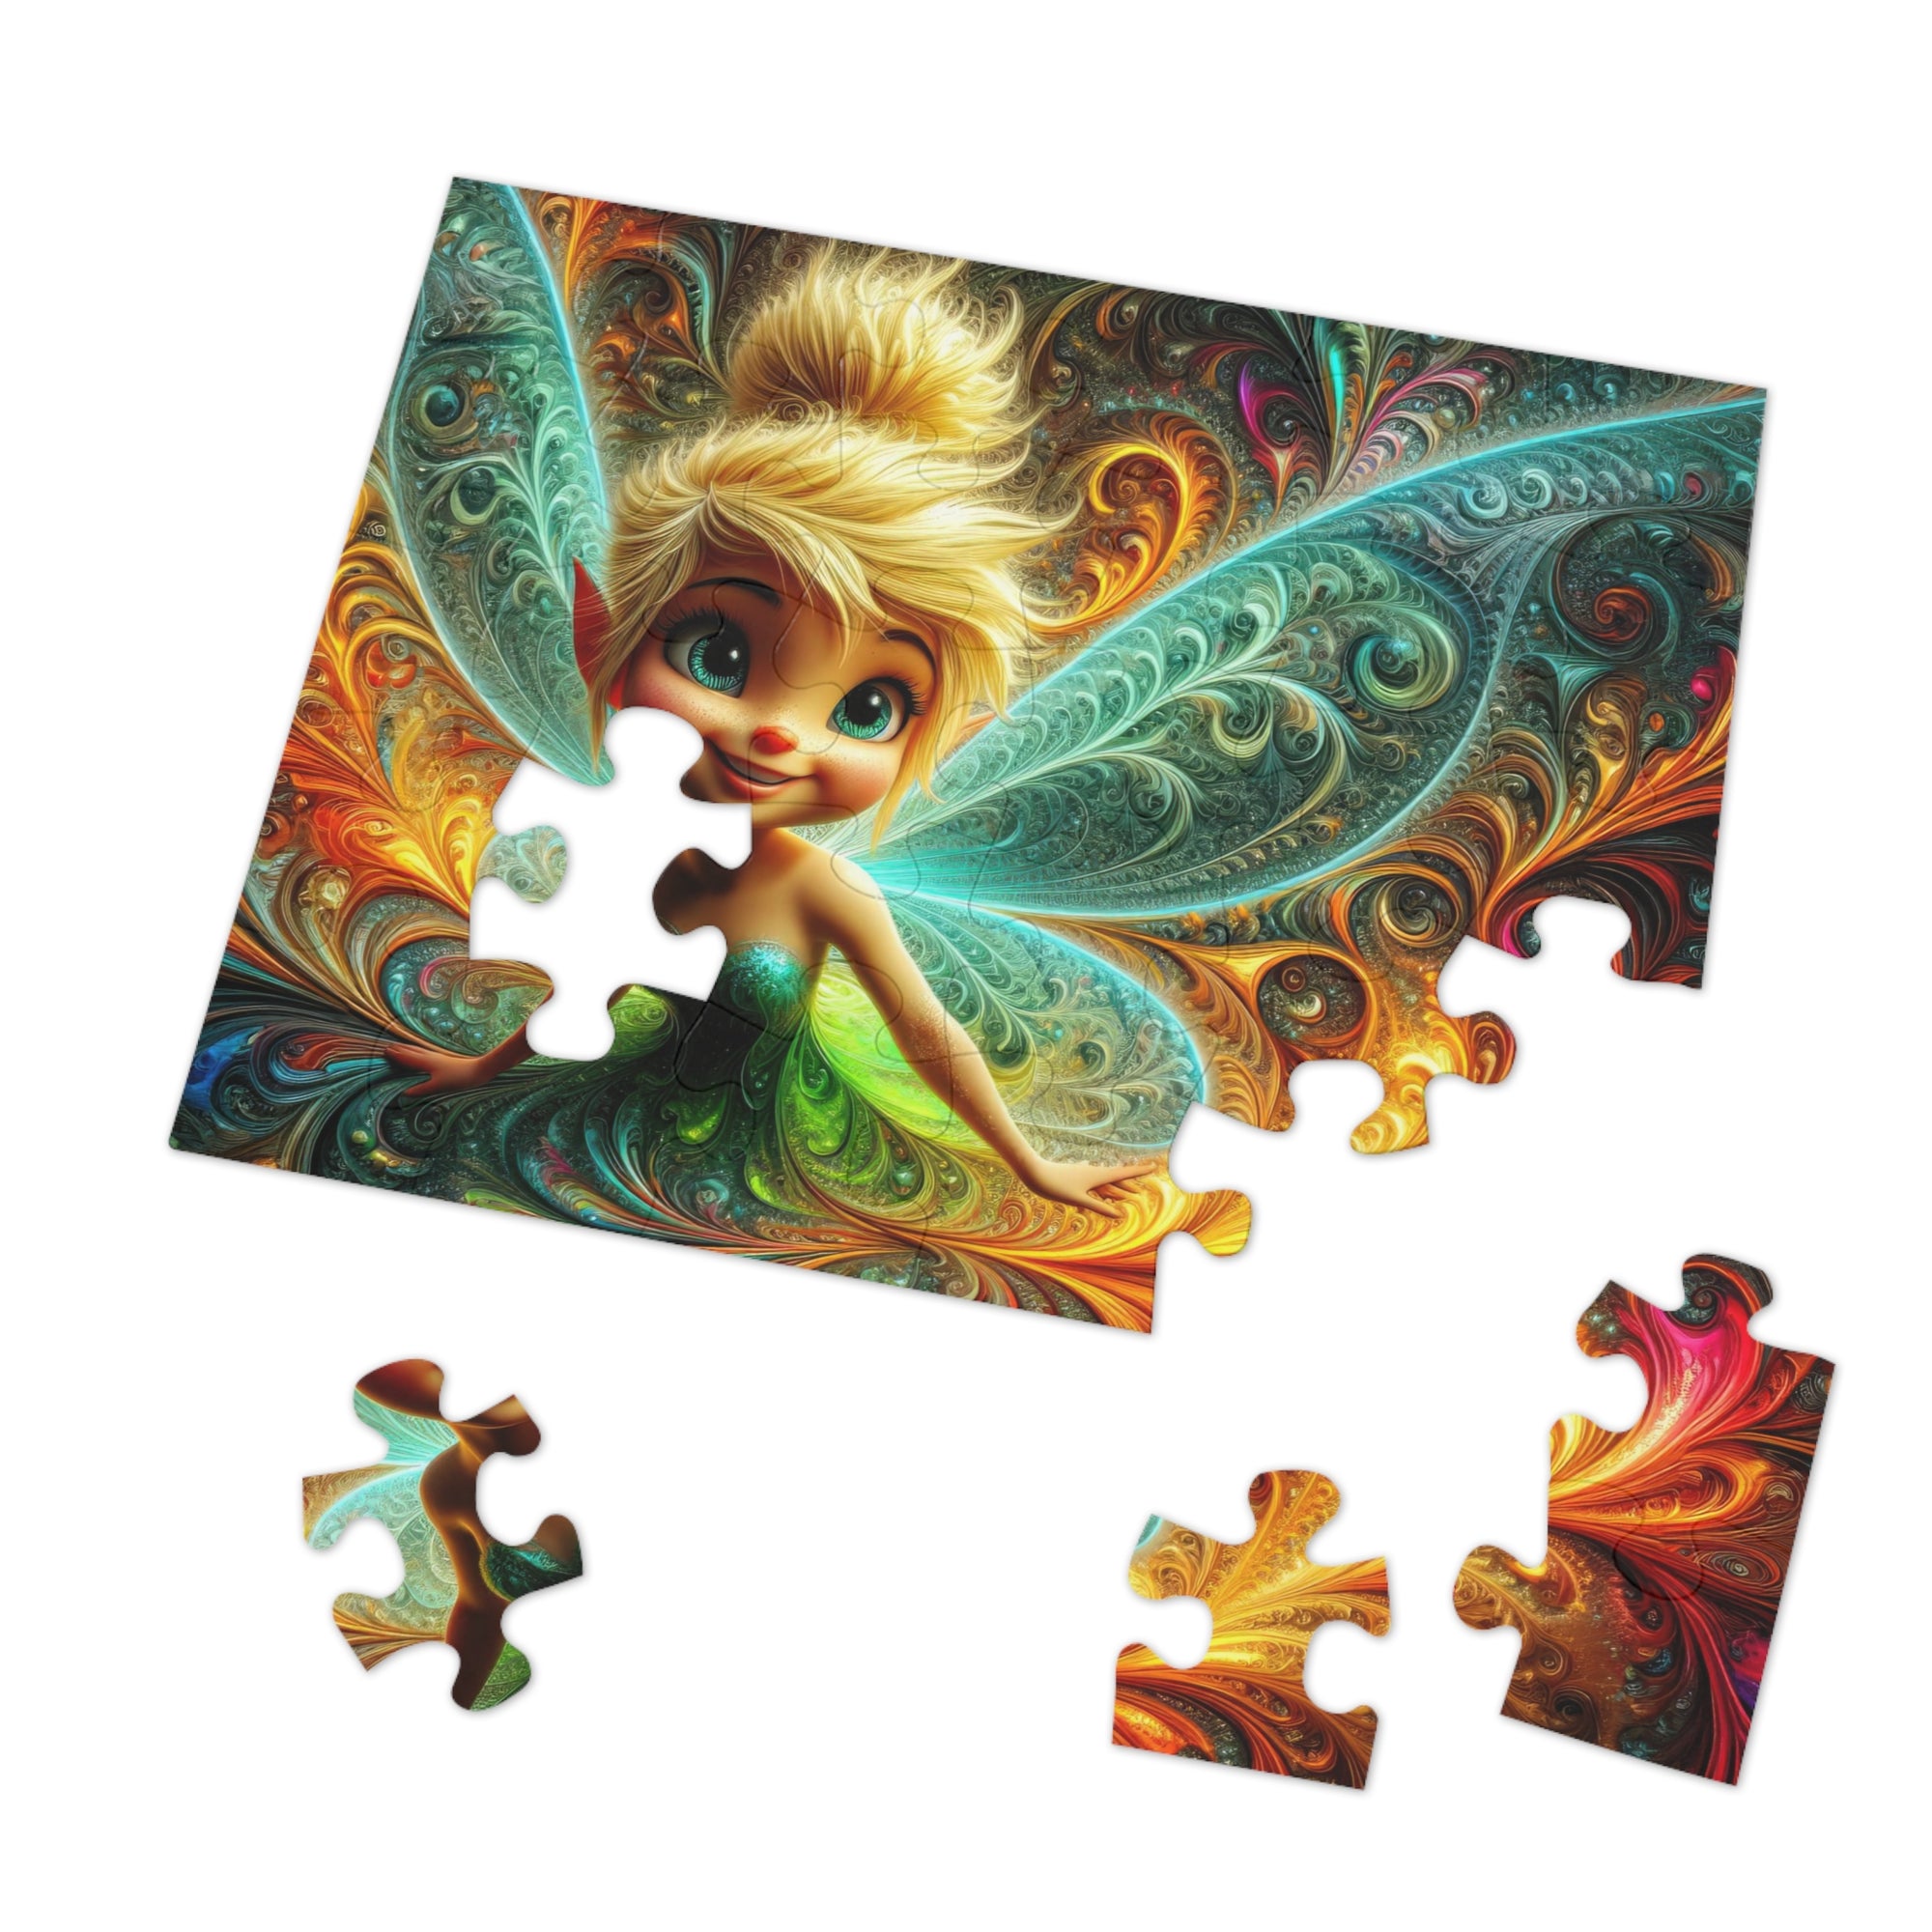 Puzzle Obertura adornada del duende opulento